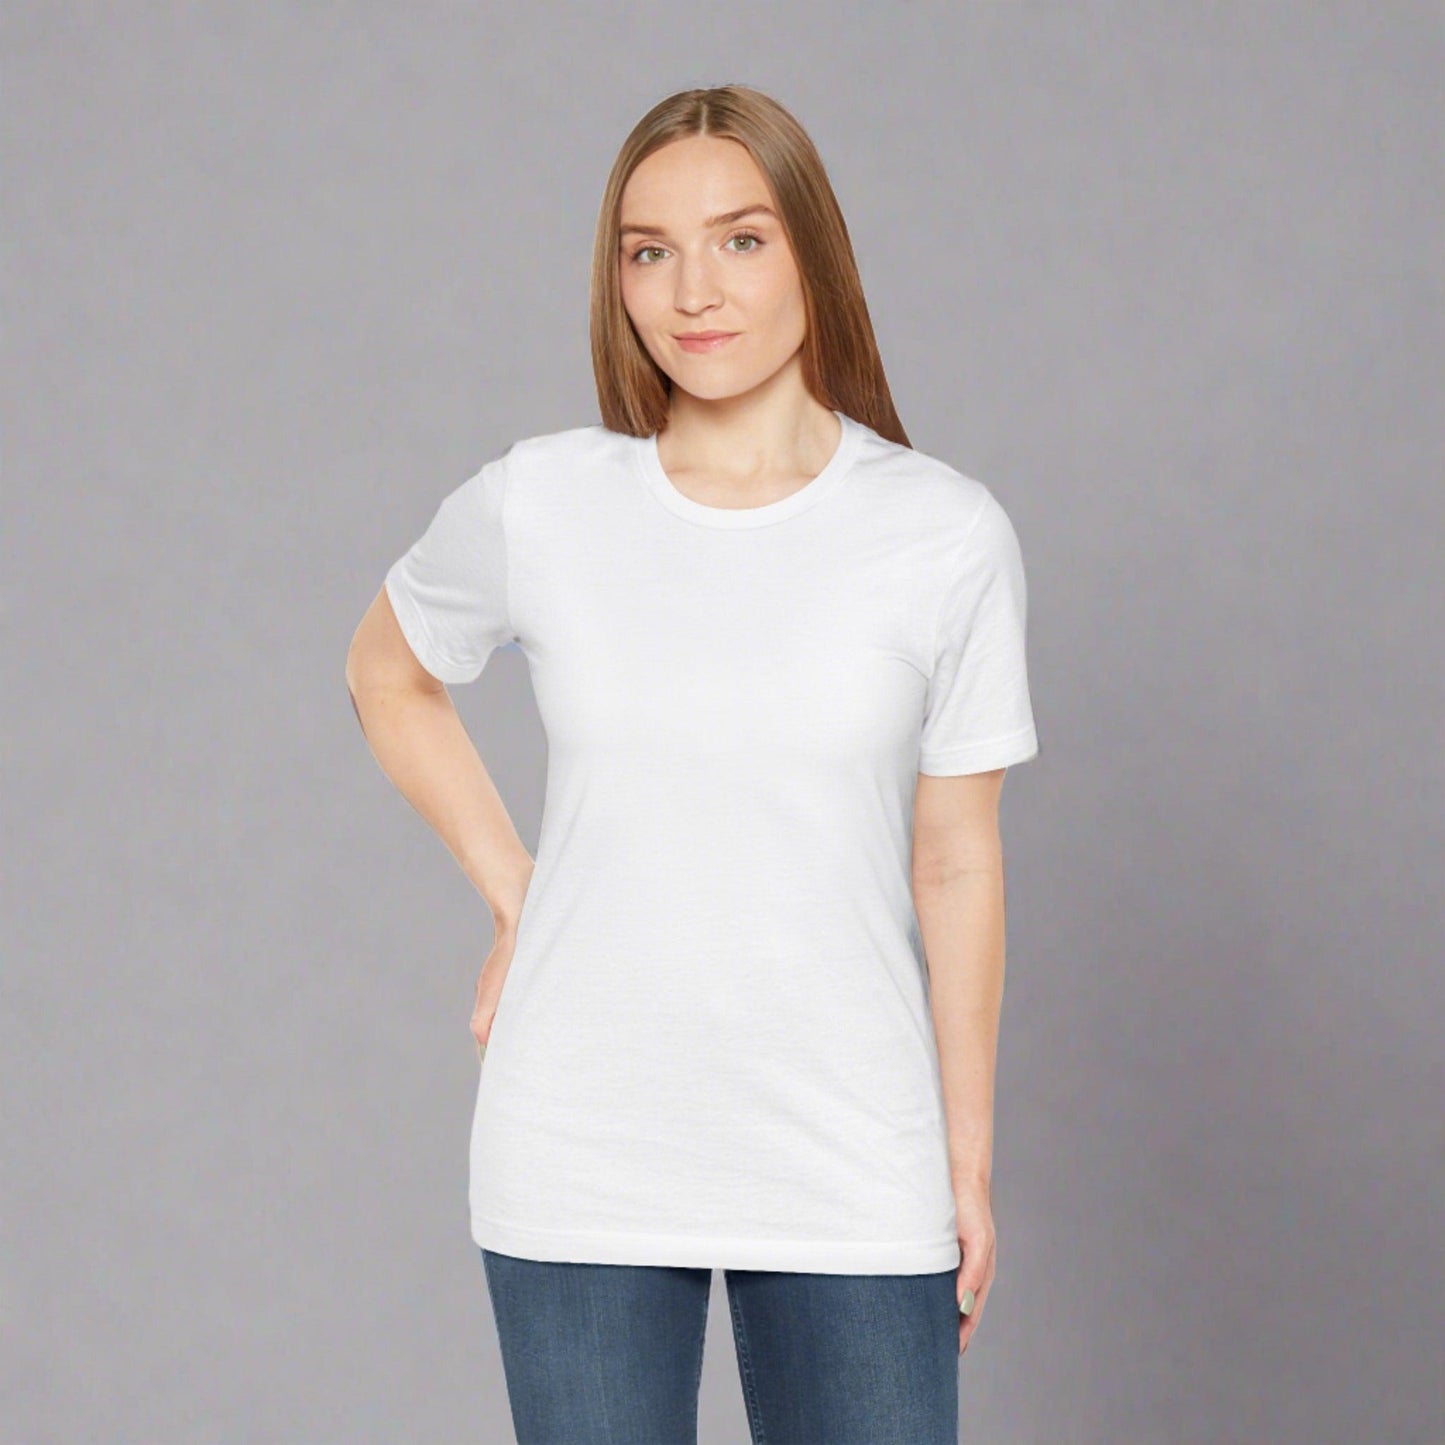 Womens White T Shirts Premium Casual Short Sleeve Shirts Oversized Tops